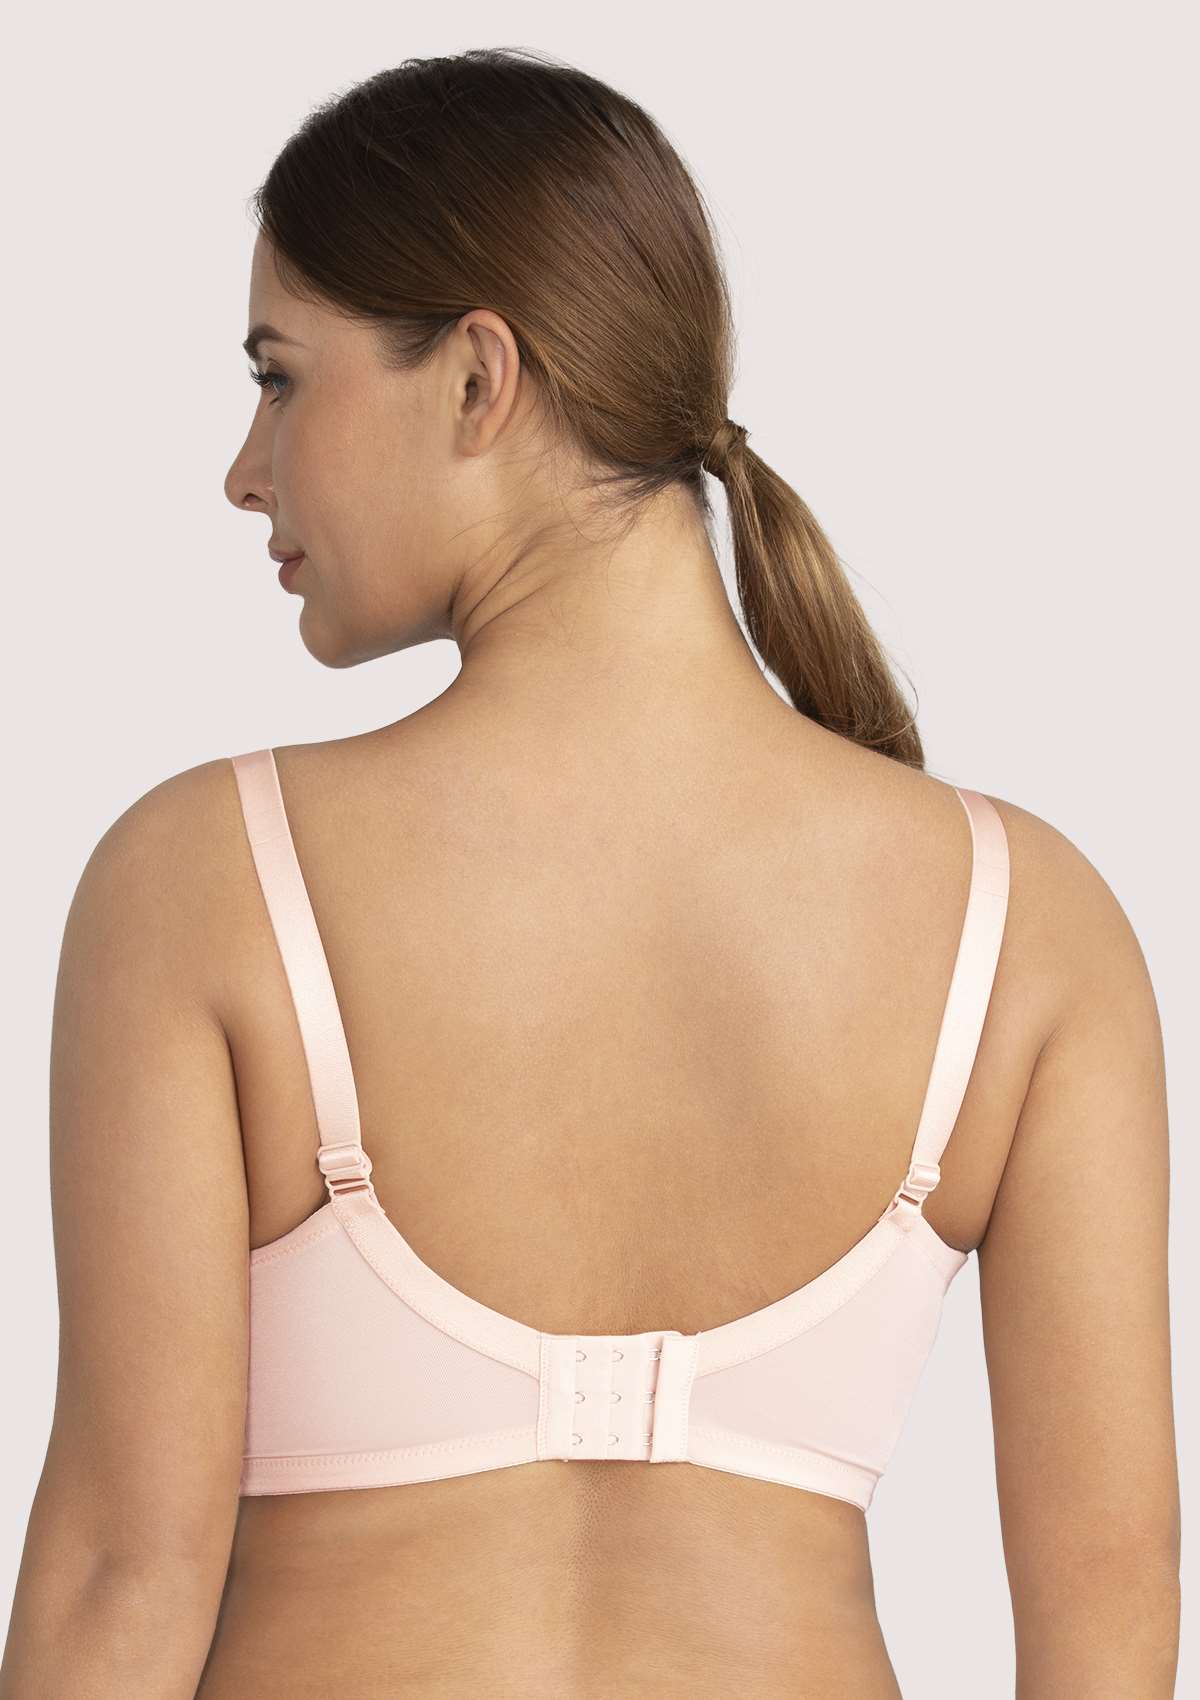 HSIA Sunflower Matching Bra And Panties Set: Comfortable Plus Size Bra - Pink / 44 / C